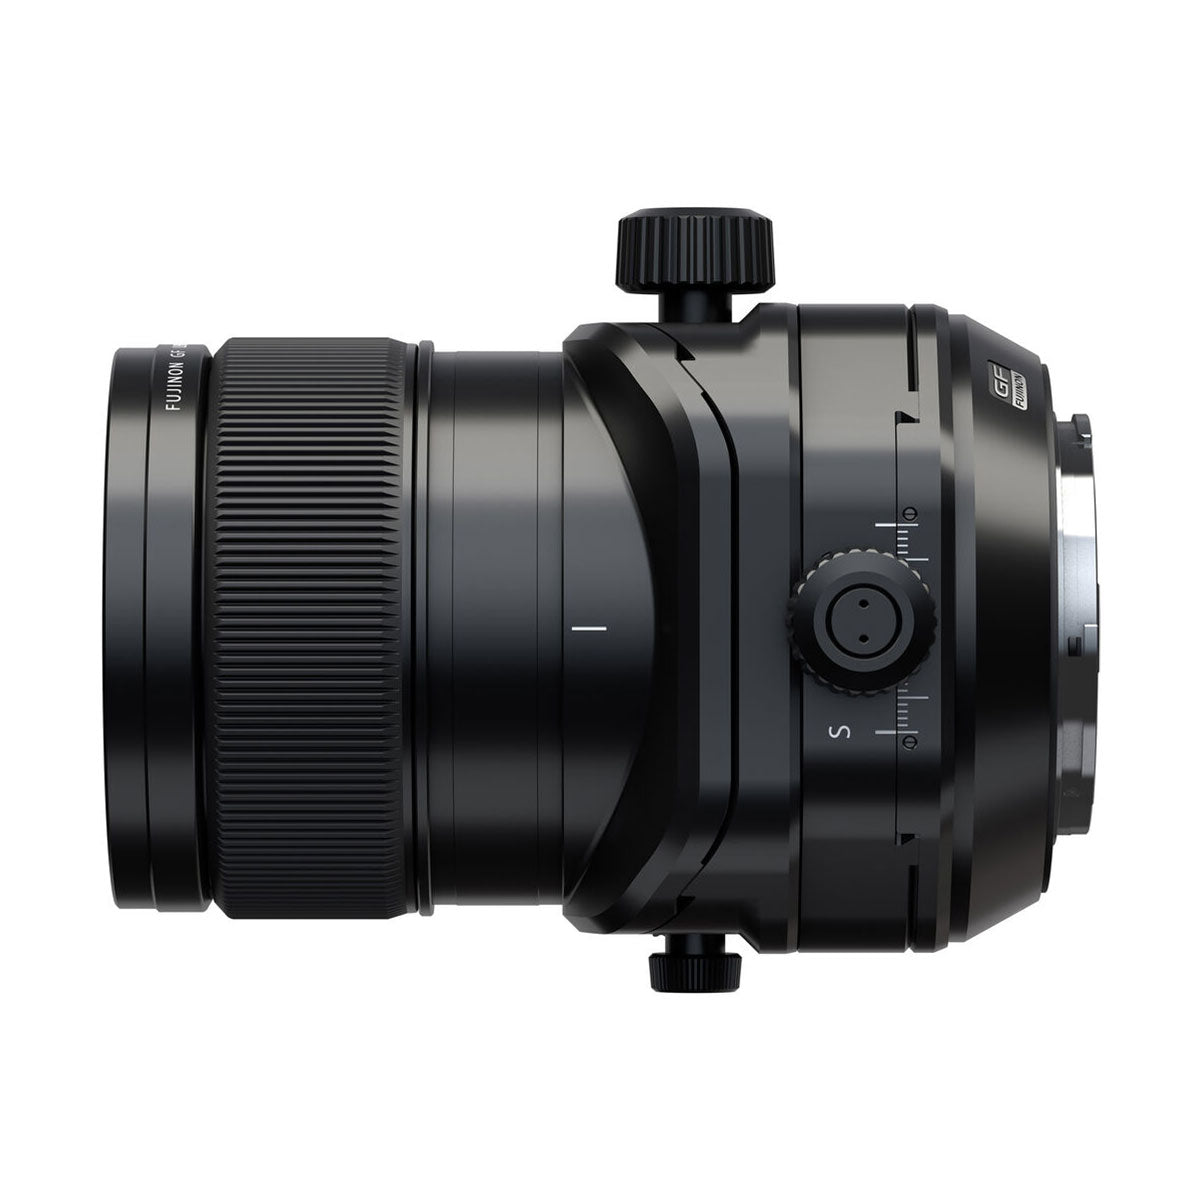 Fujifilm GF 30mm f5.6 T/S Lens